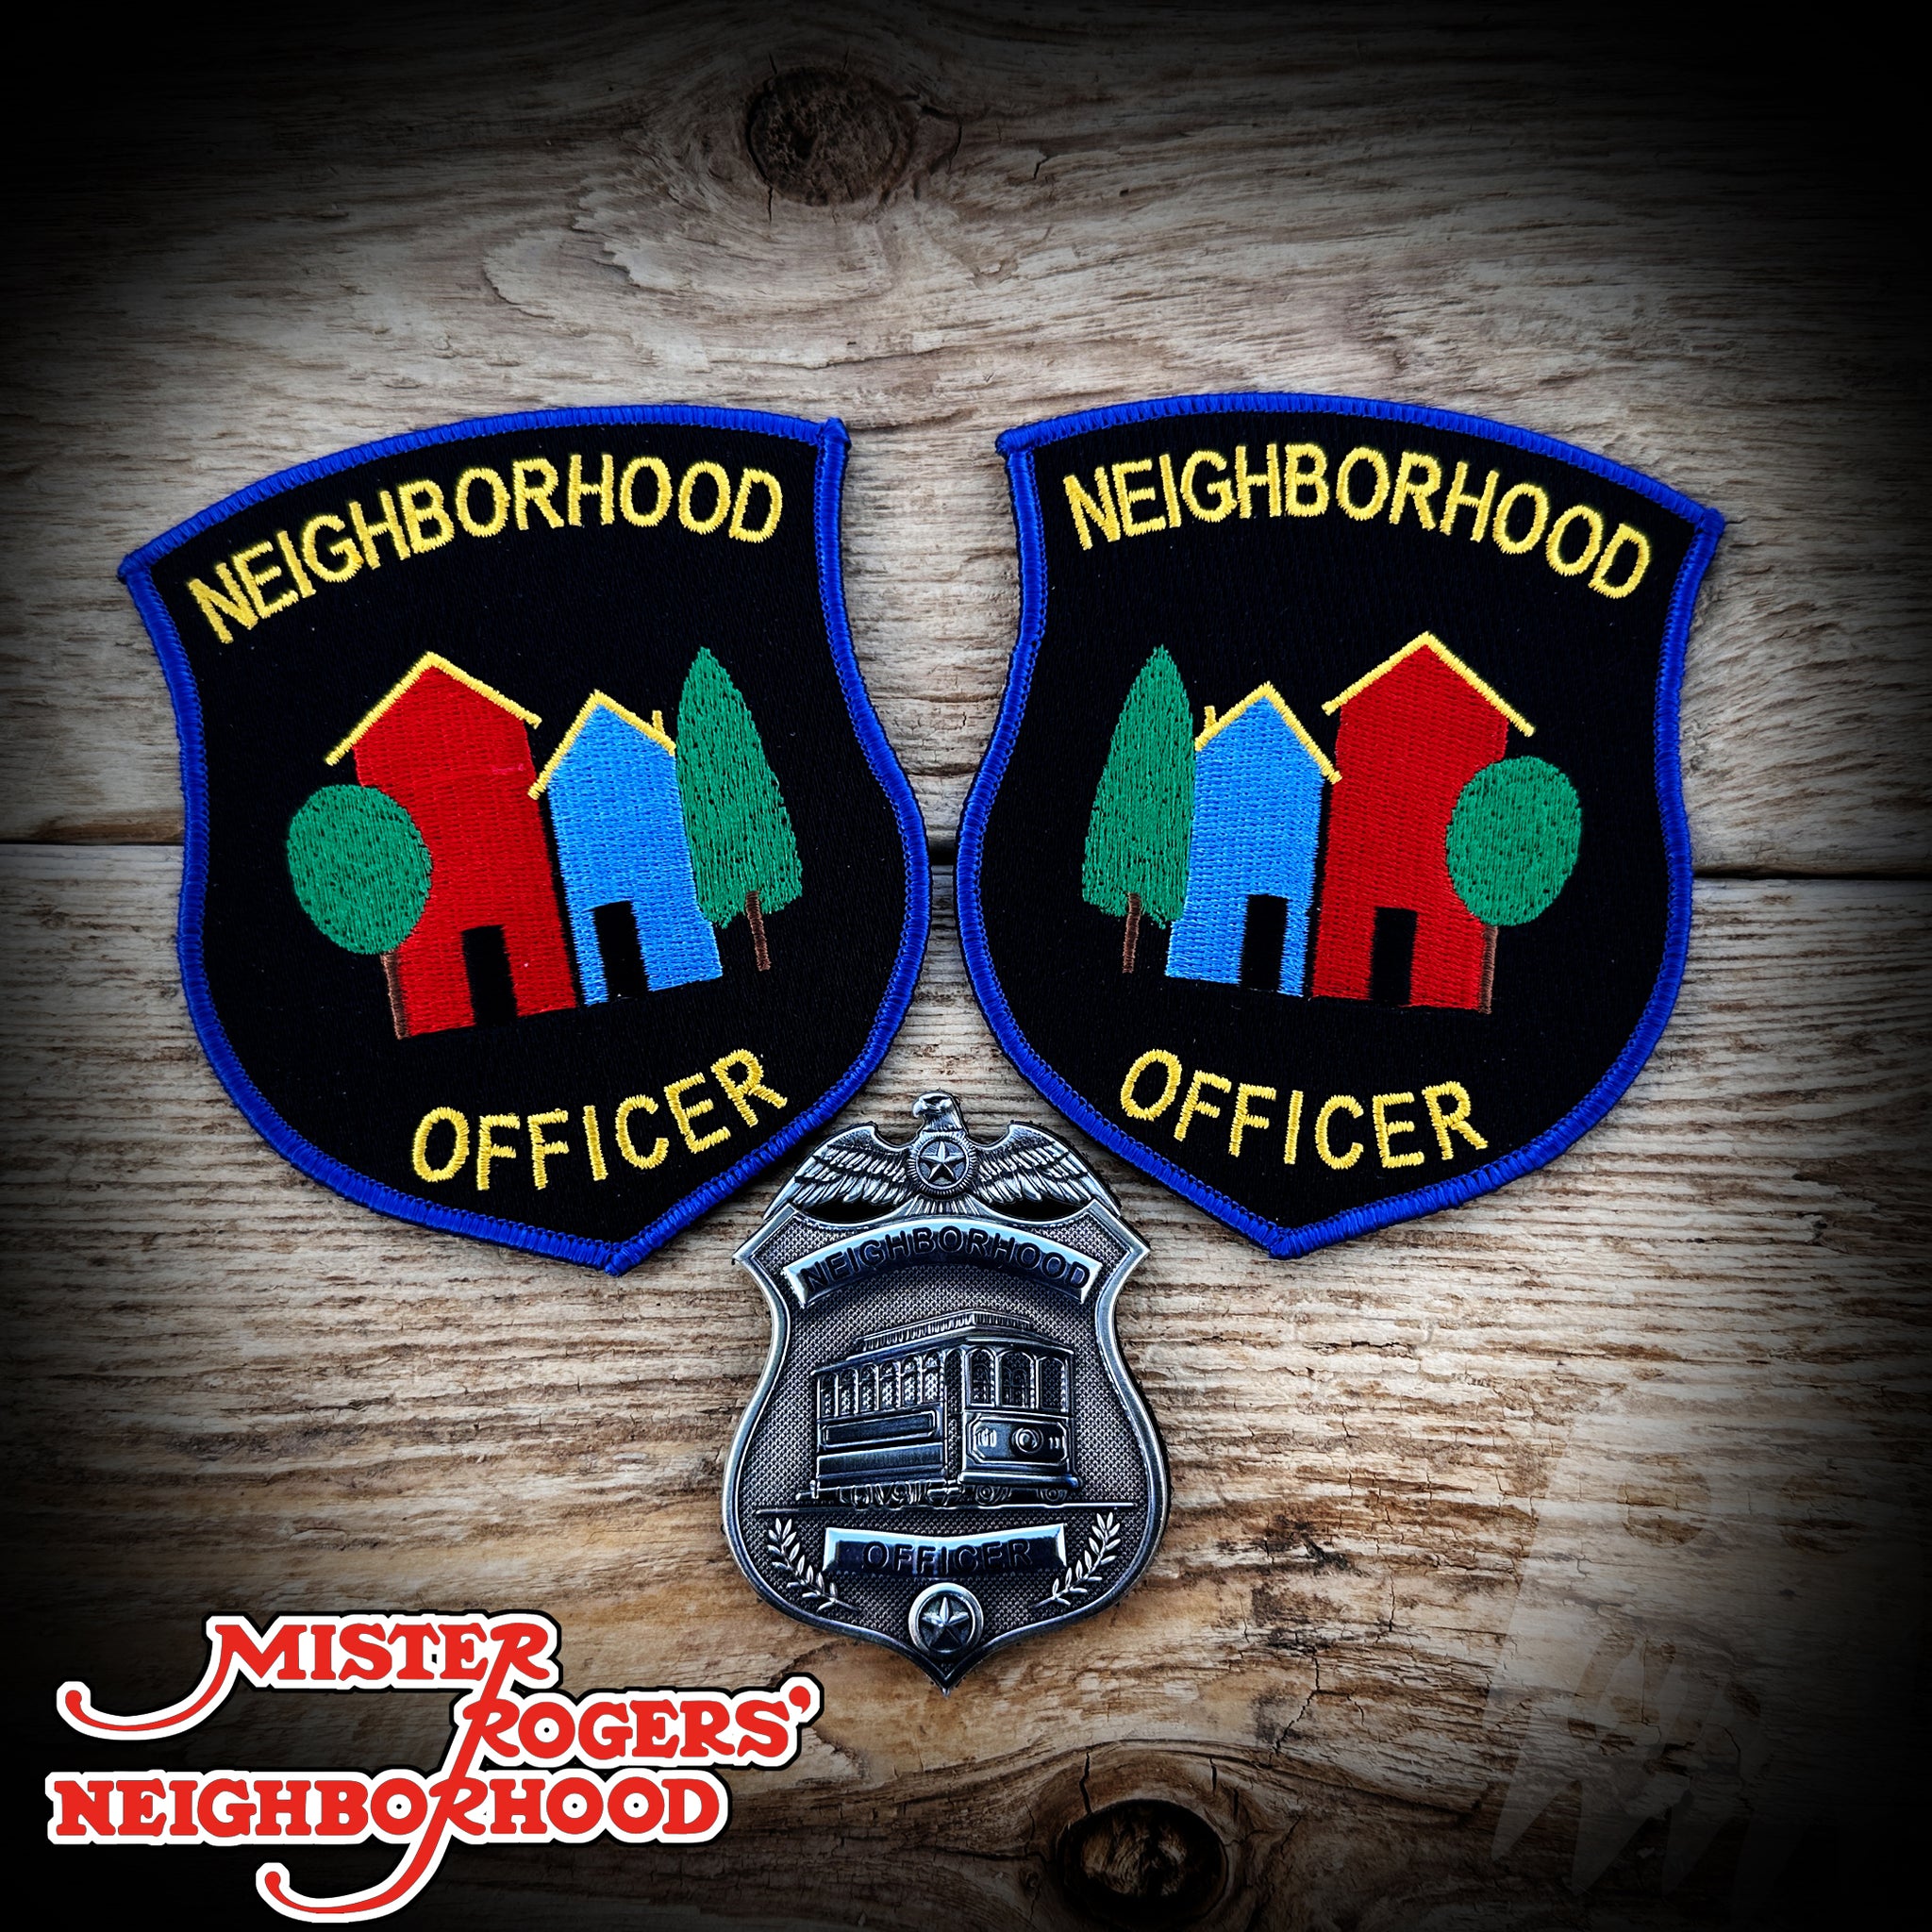 #93 - Neighborhood Officer - Mr. Roger's Neighorhood Officer Clemmons Replicas